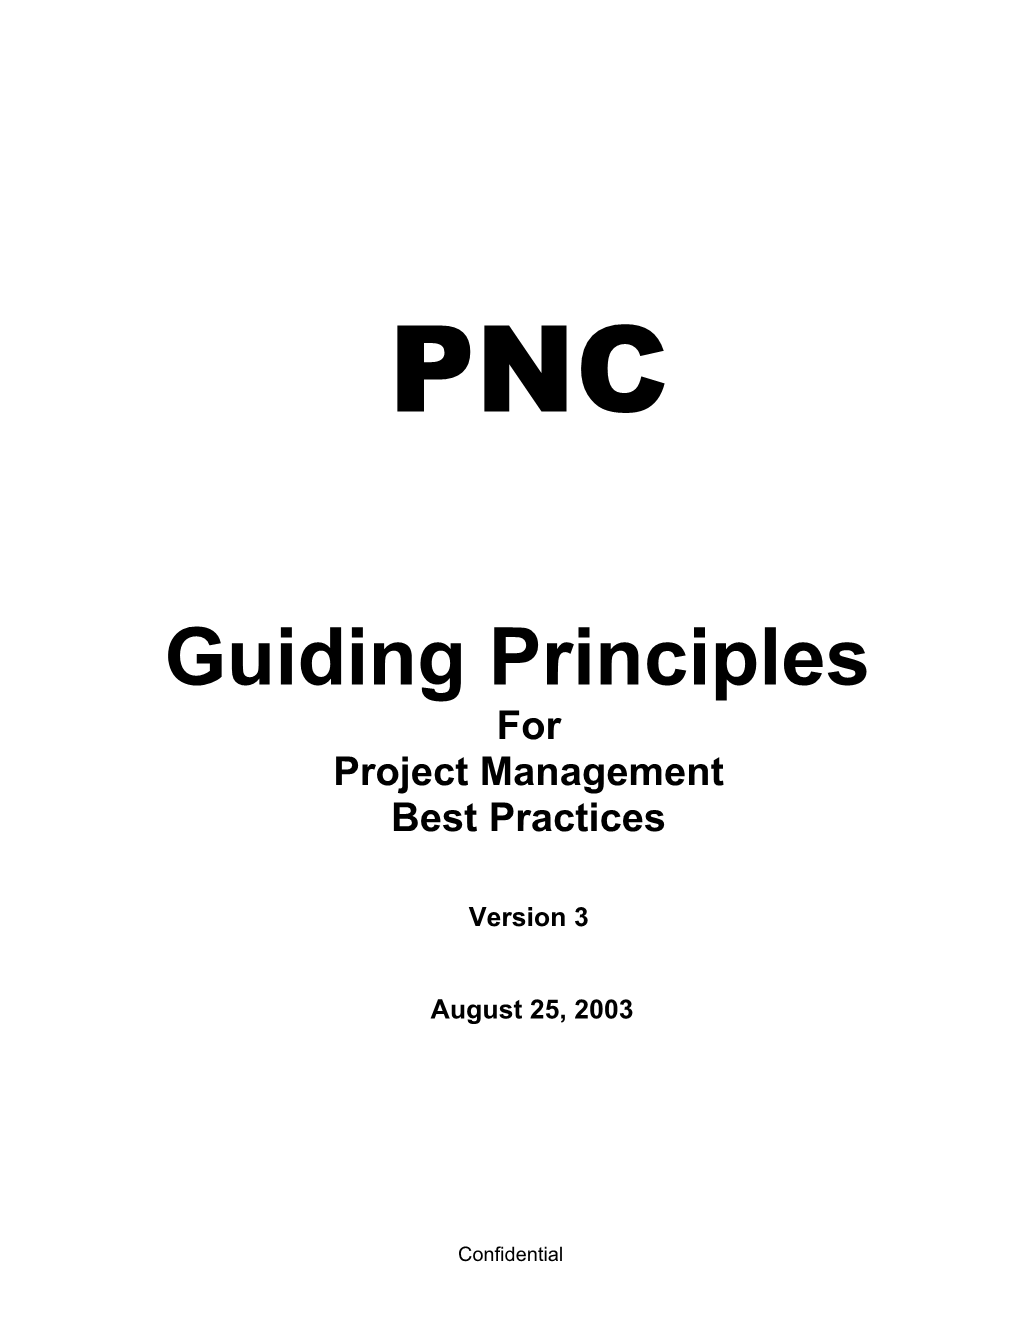 PNC Project Management Guiding Principles Page 14 of 14